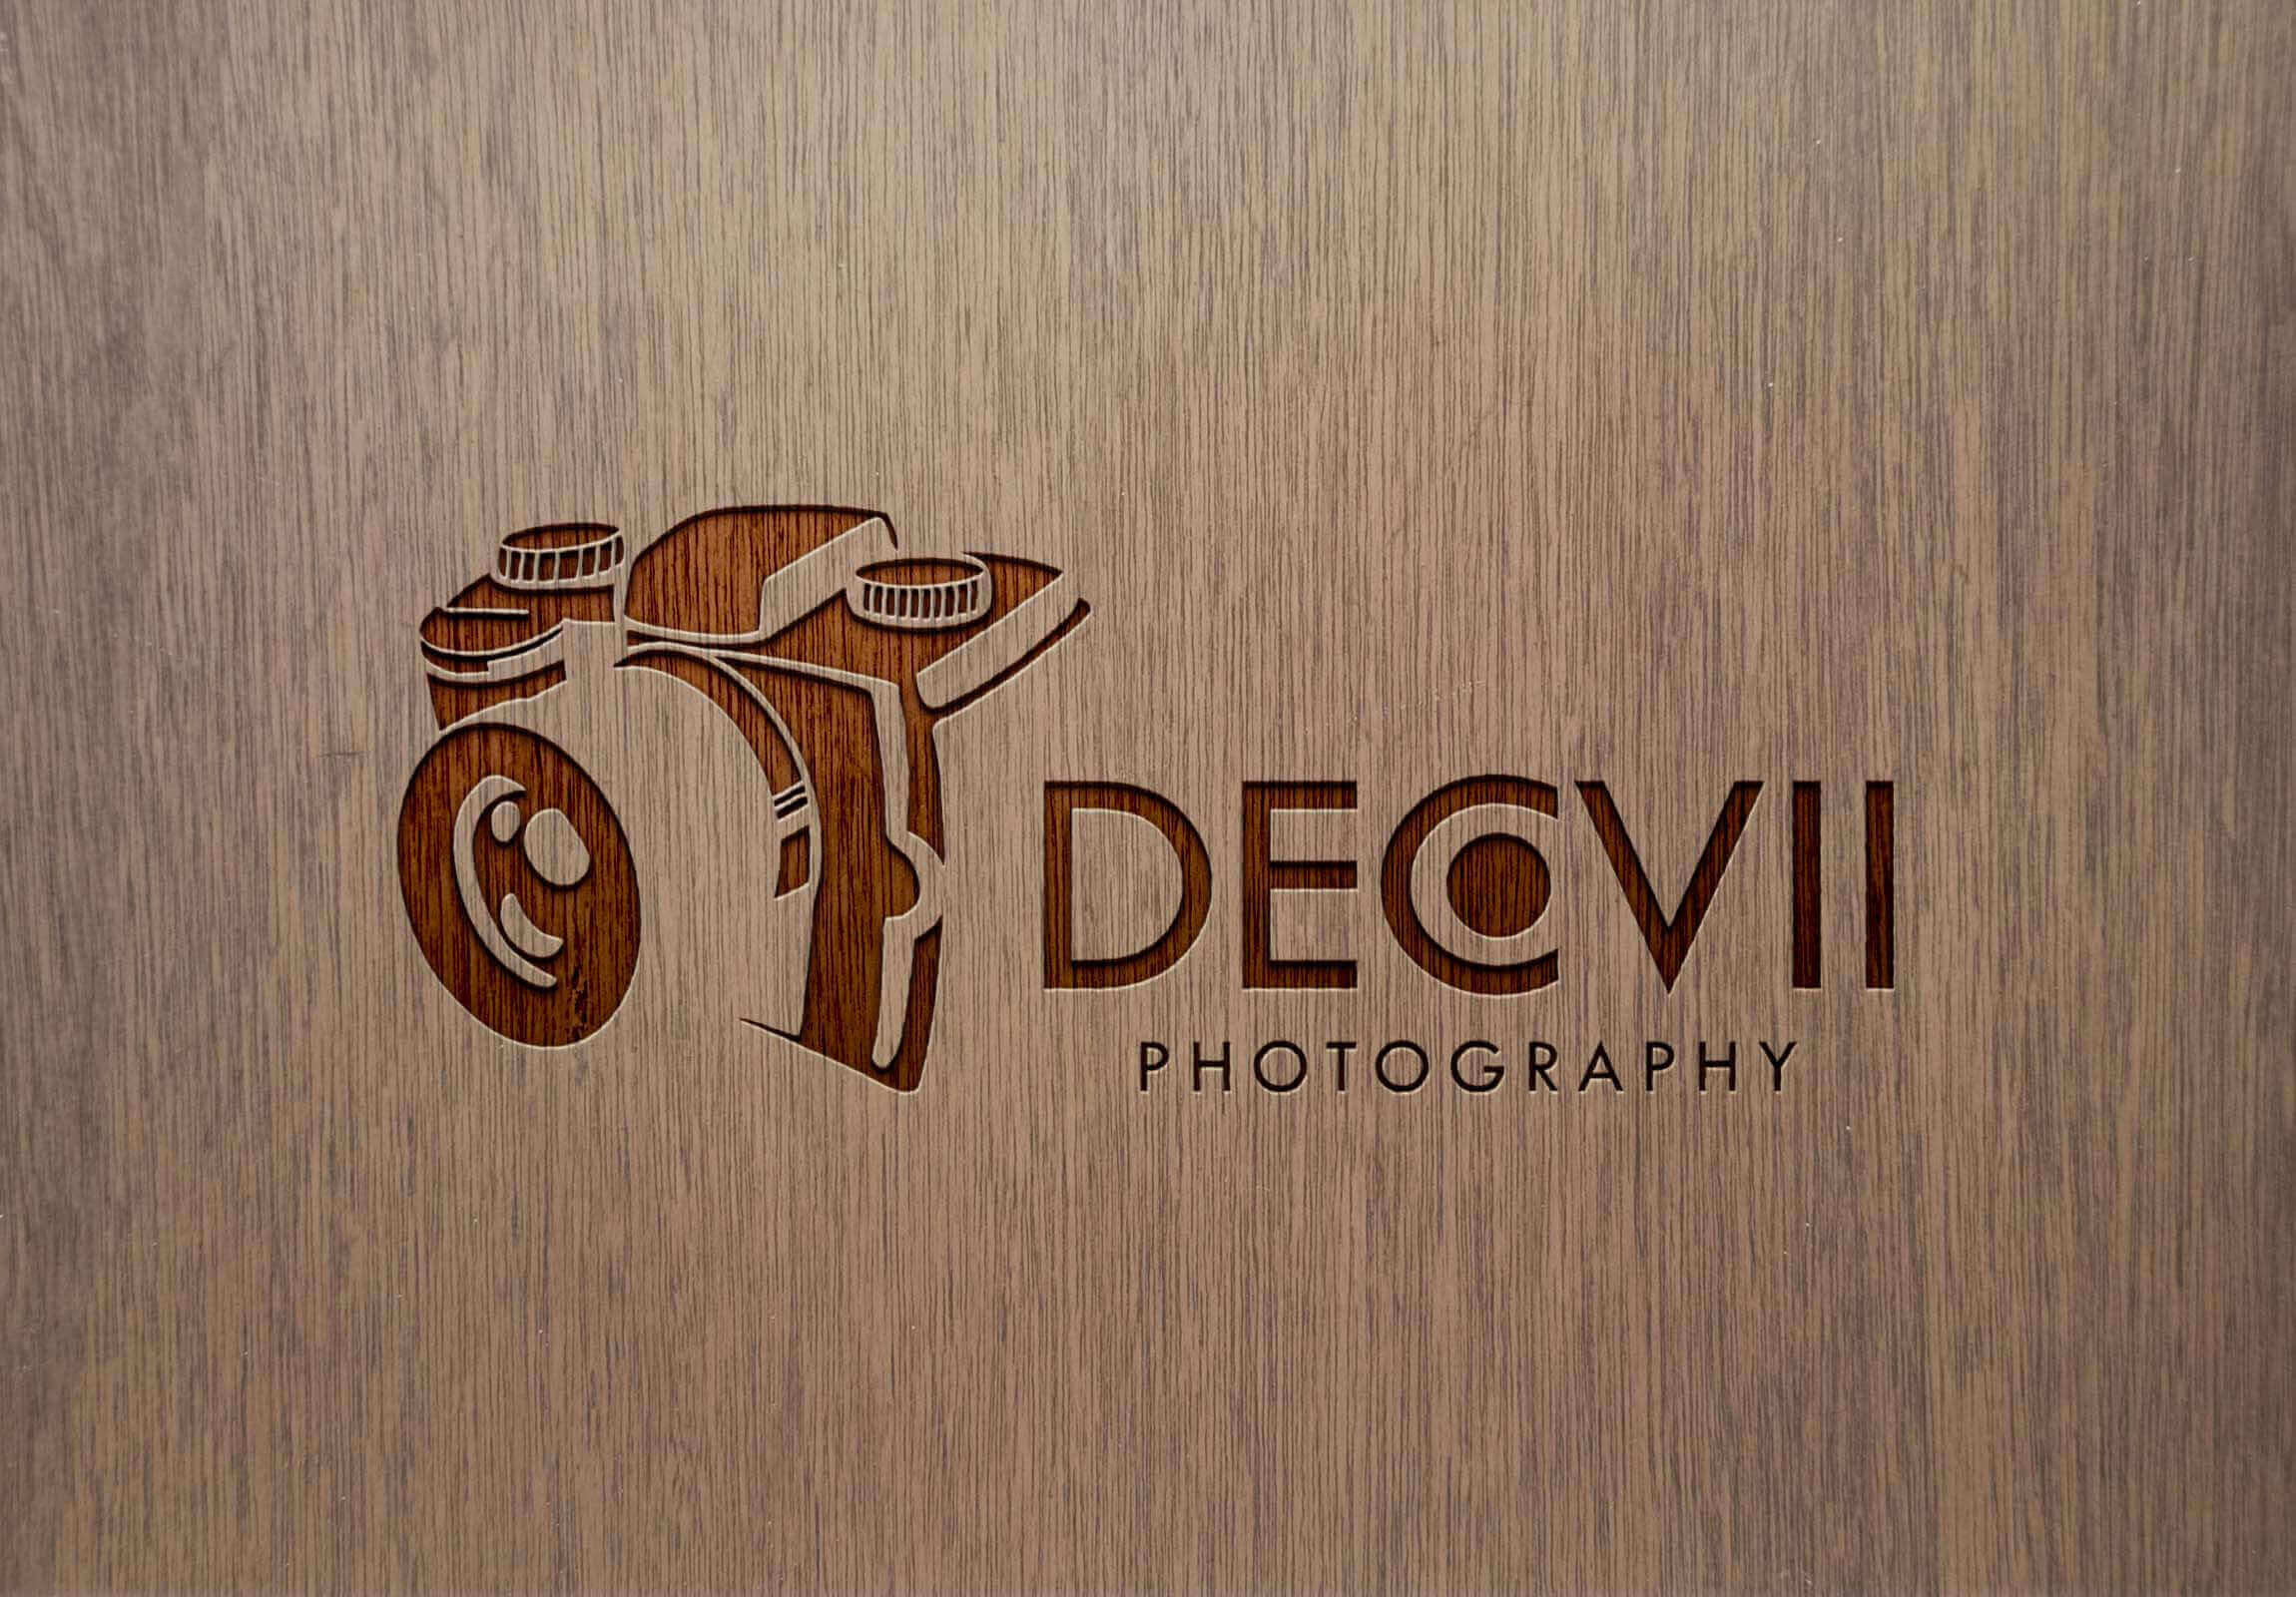 December VII Photography Logo Design